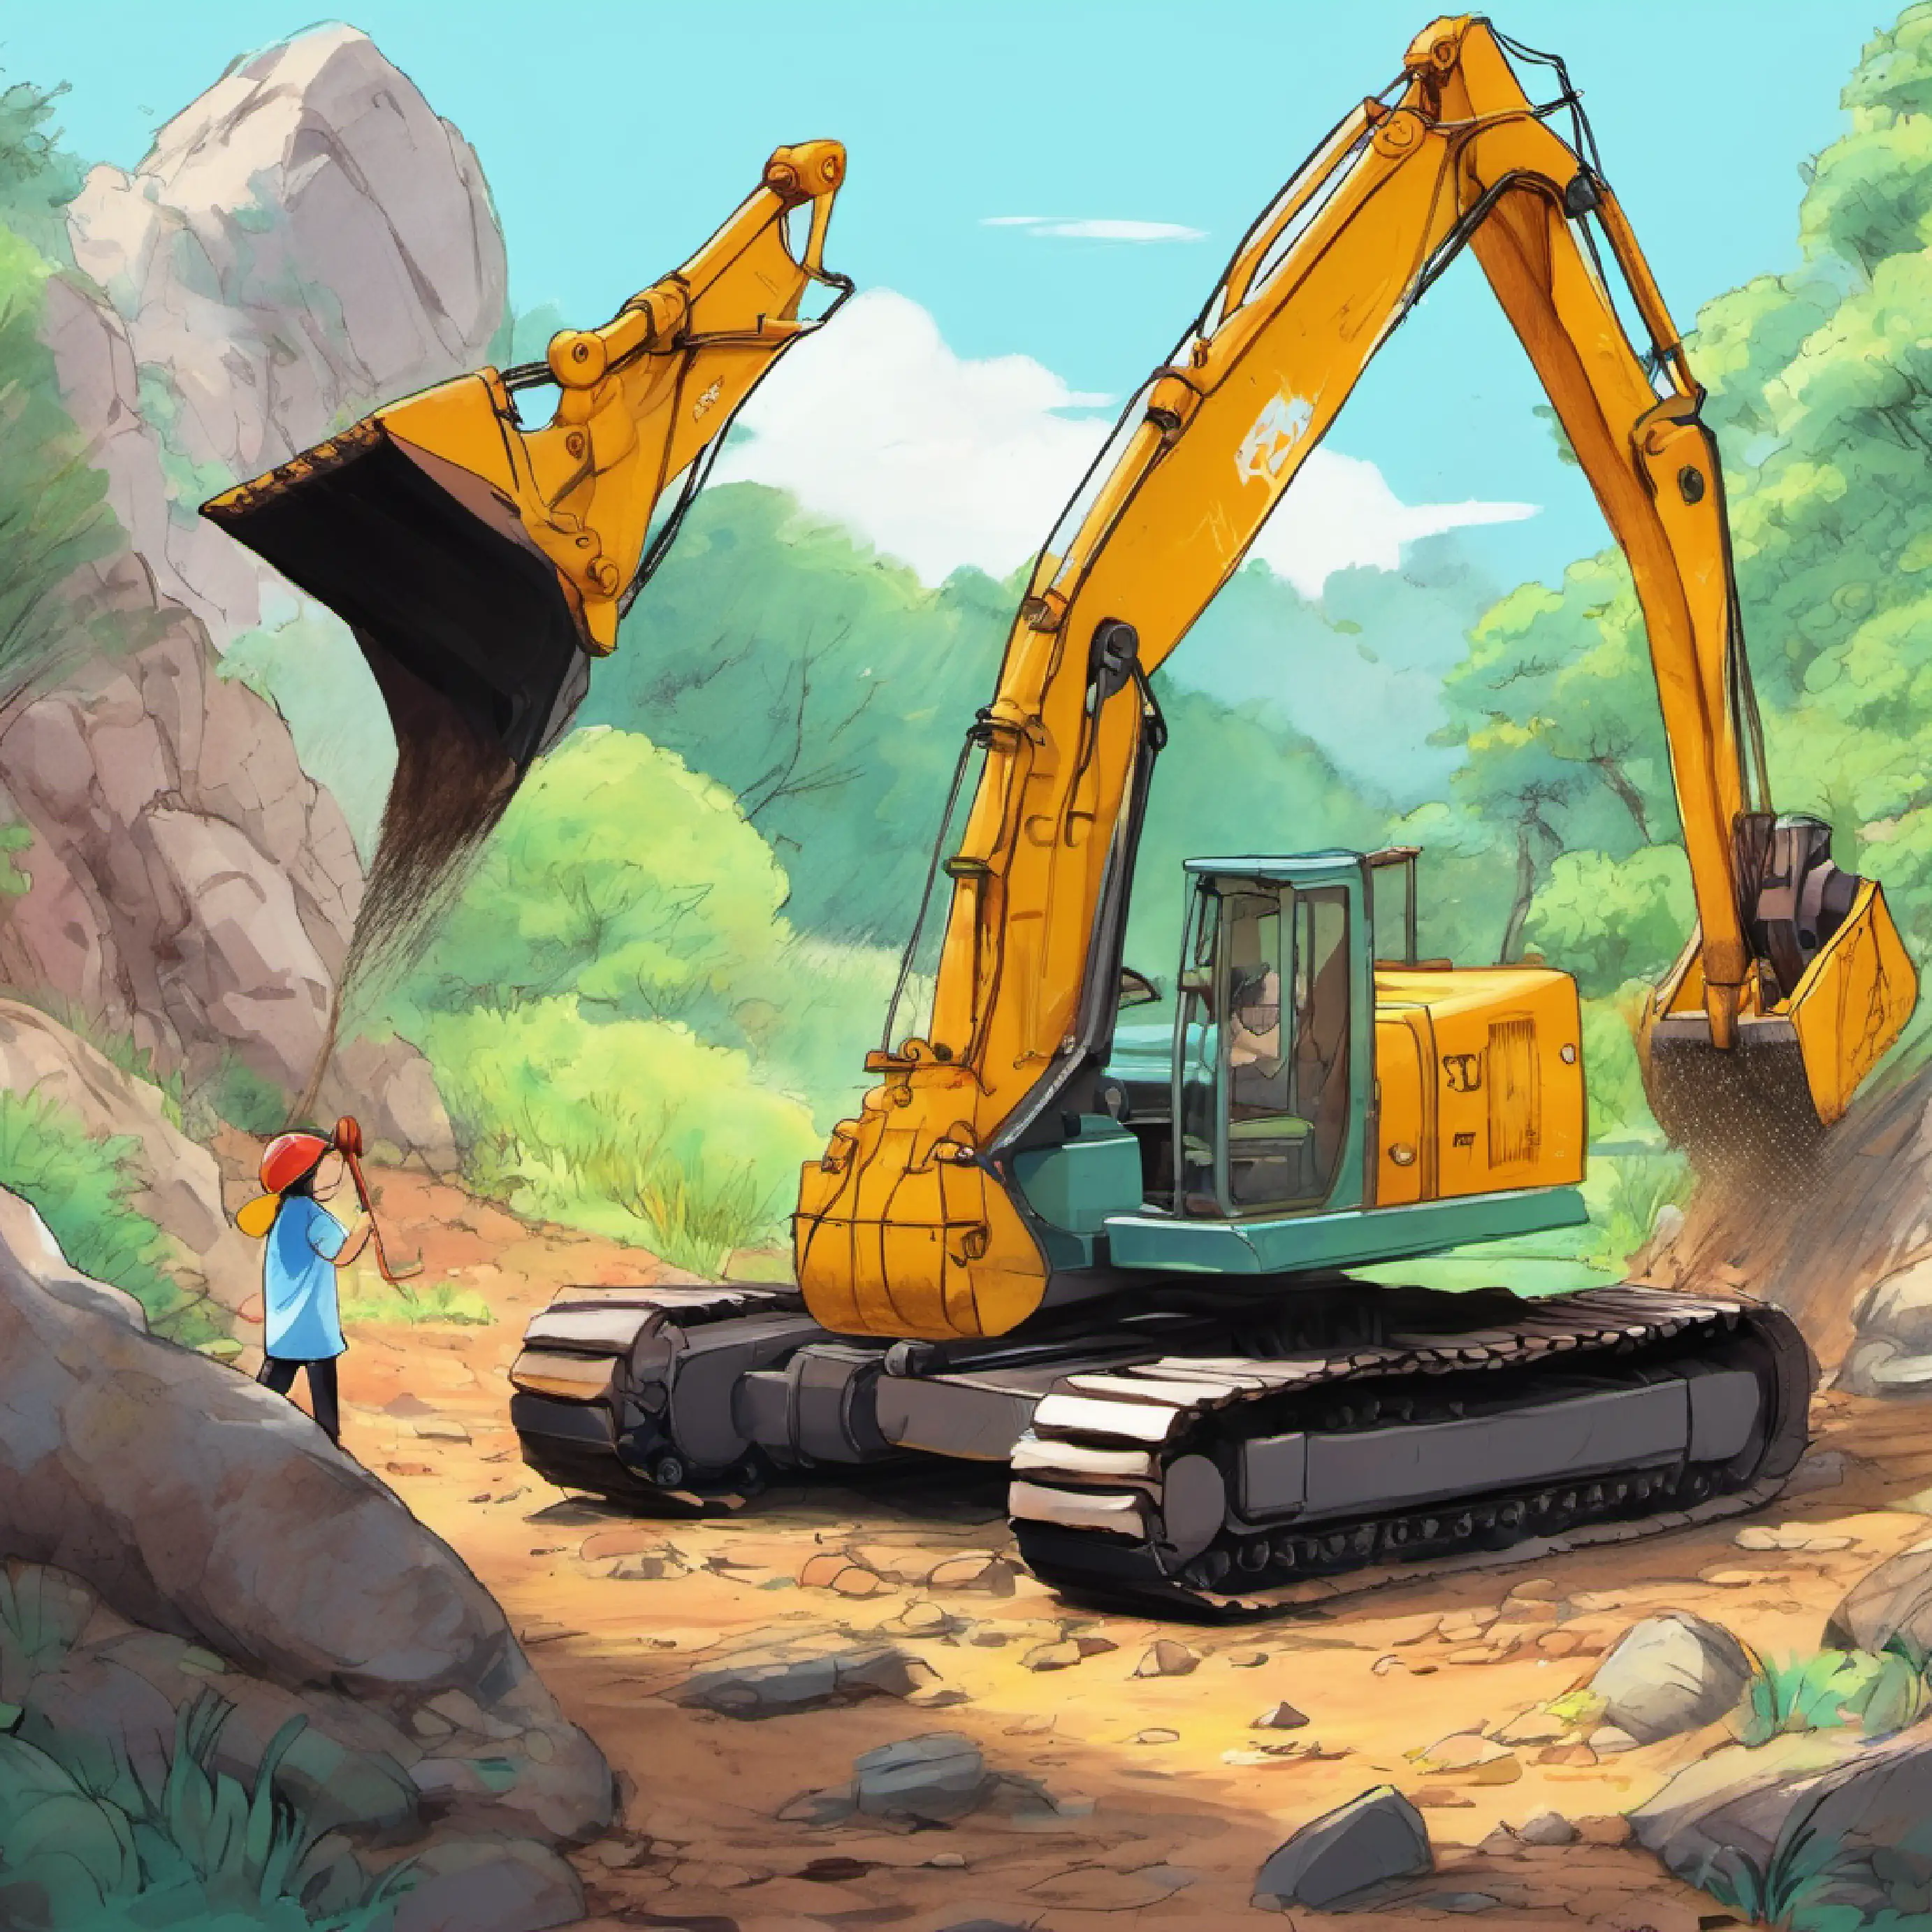 Xiao Zhu Zhu making progress with the excavator.